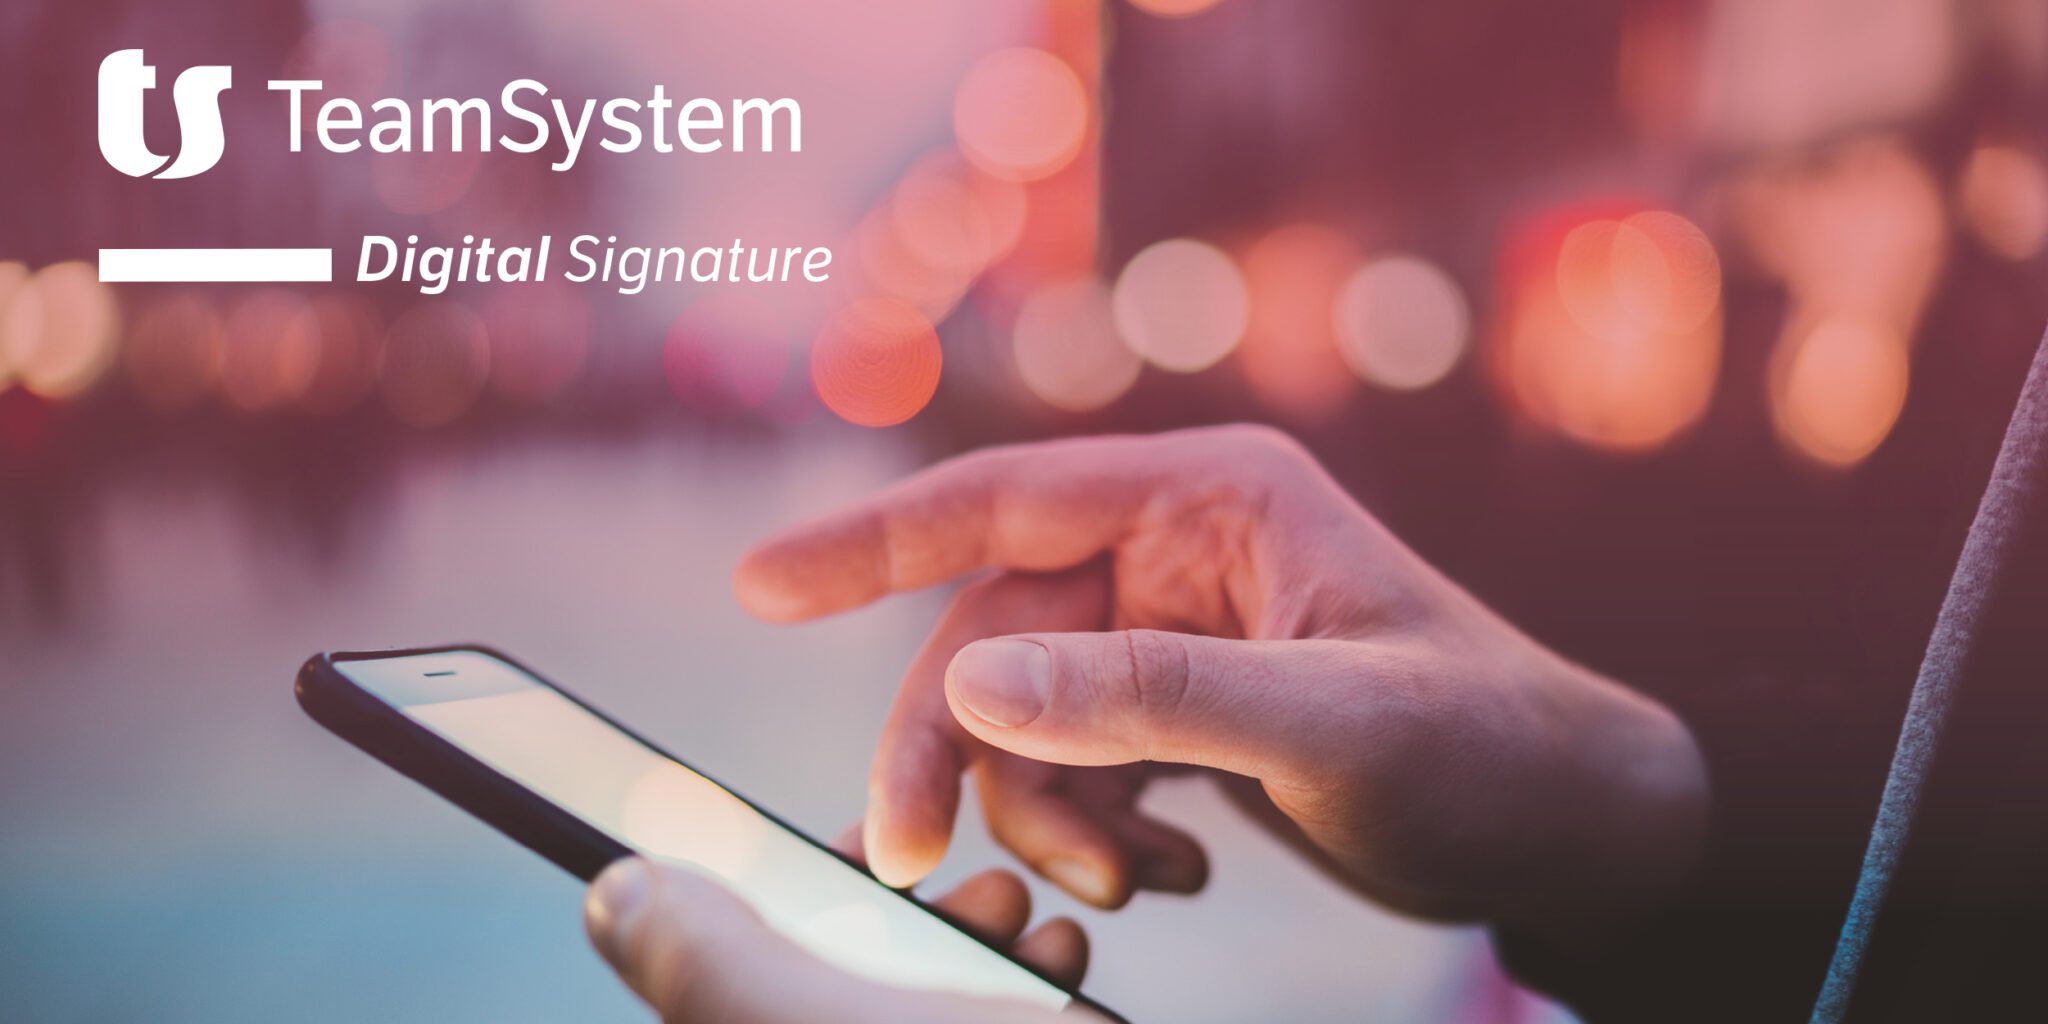 La Firma digitale Teamsystem Digital Signature per firmare tutte le tipologie di documenti